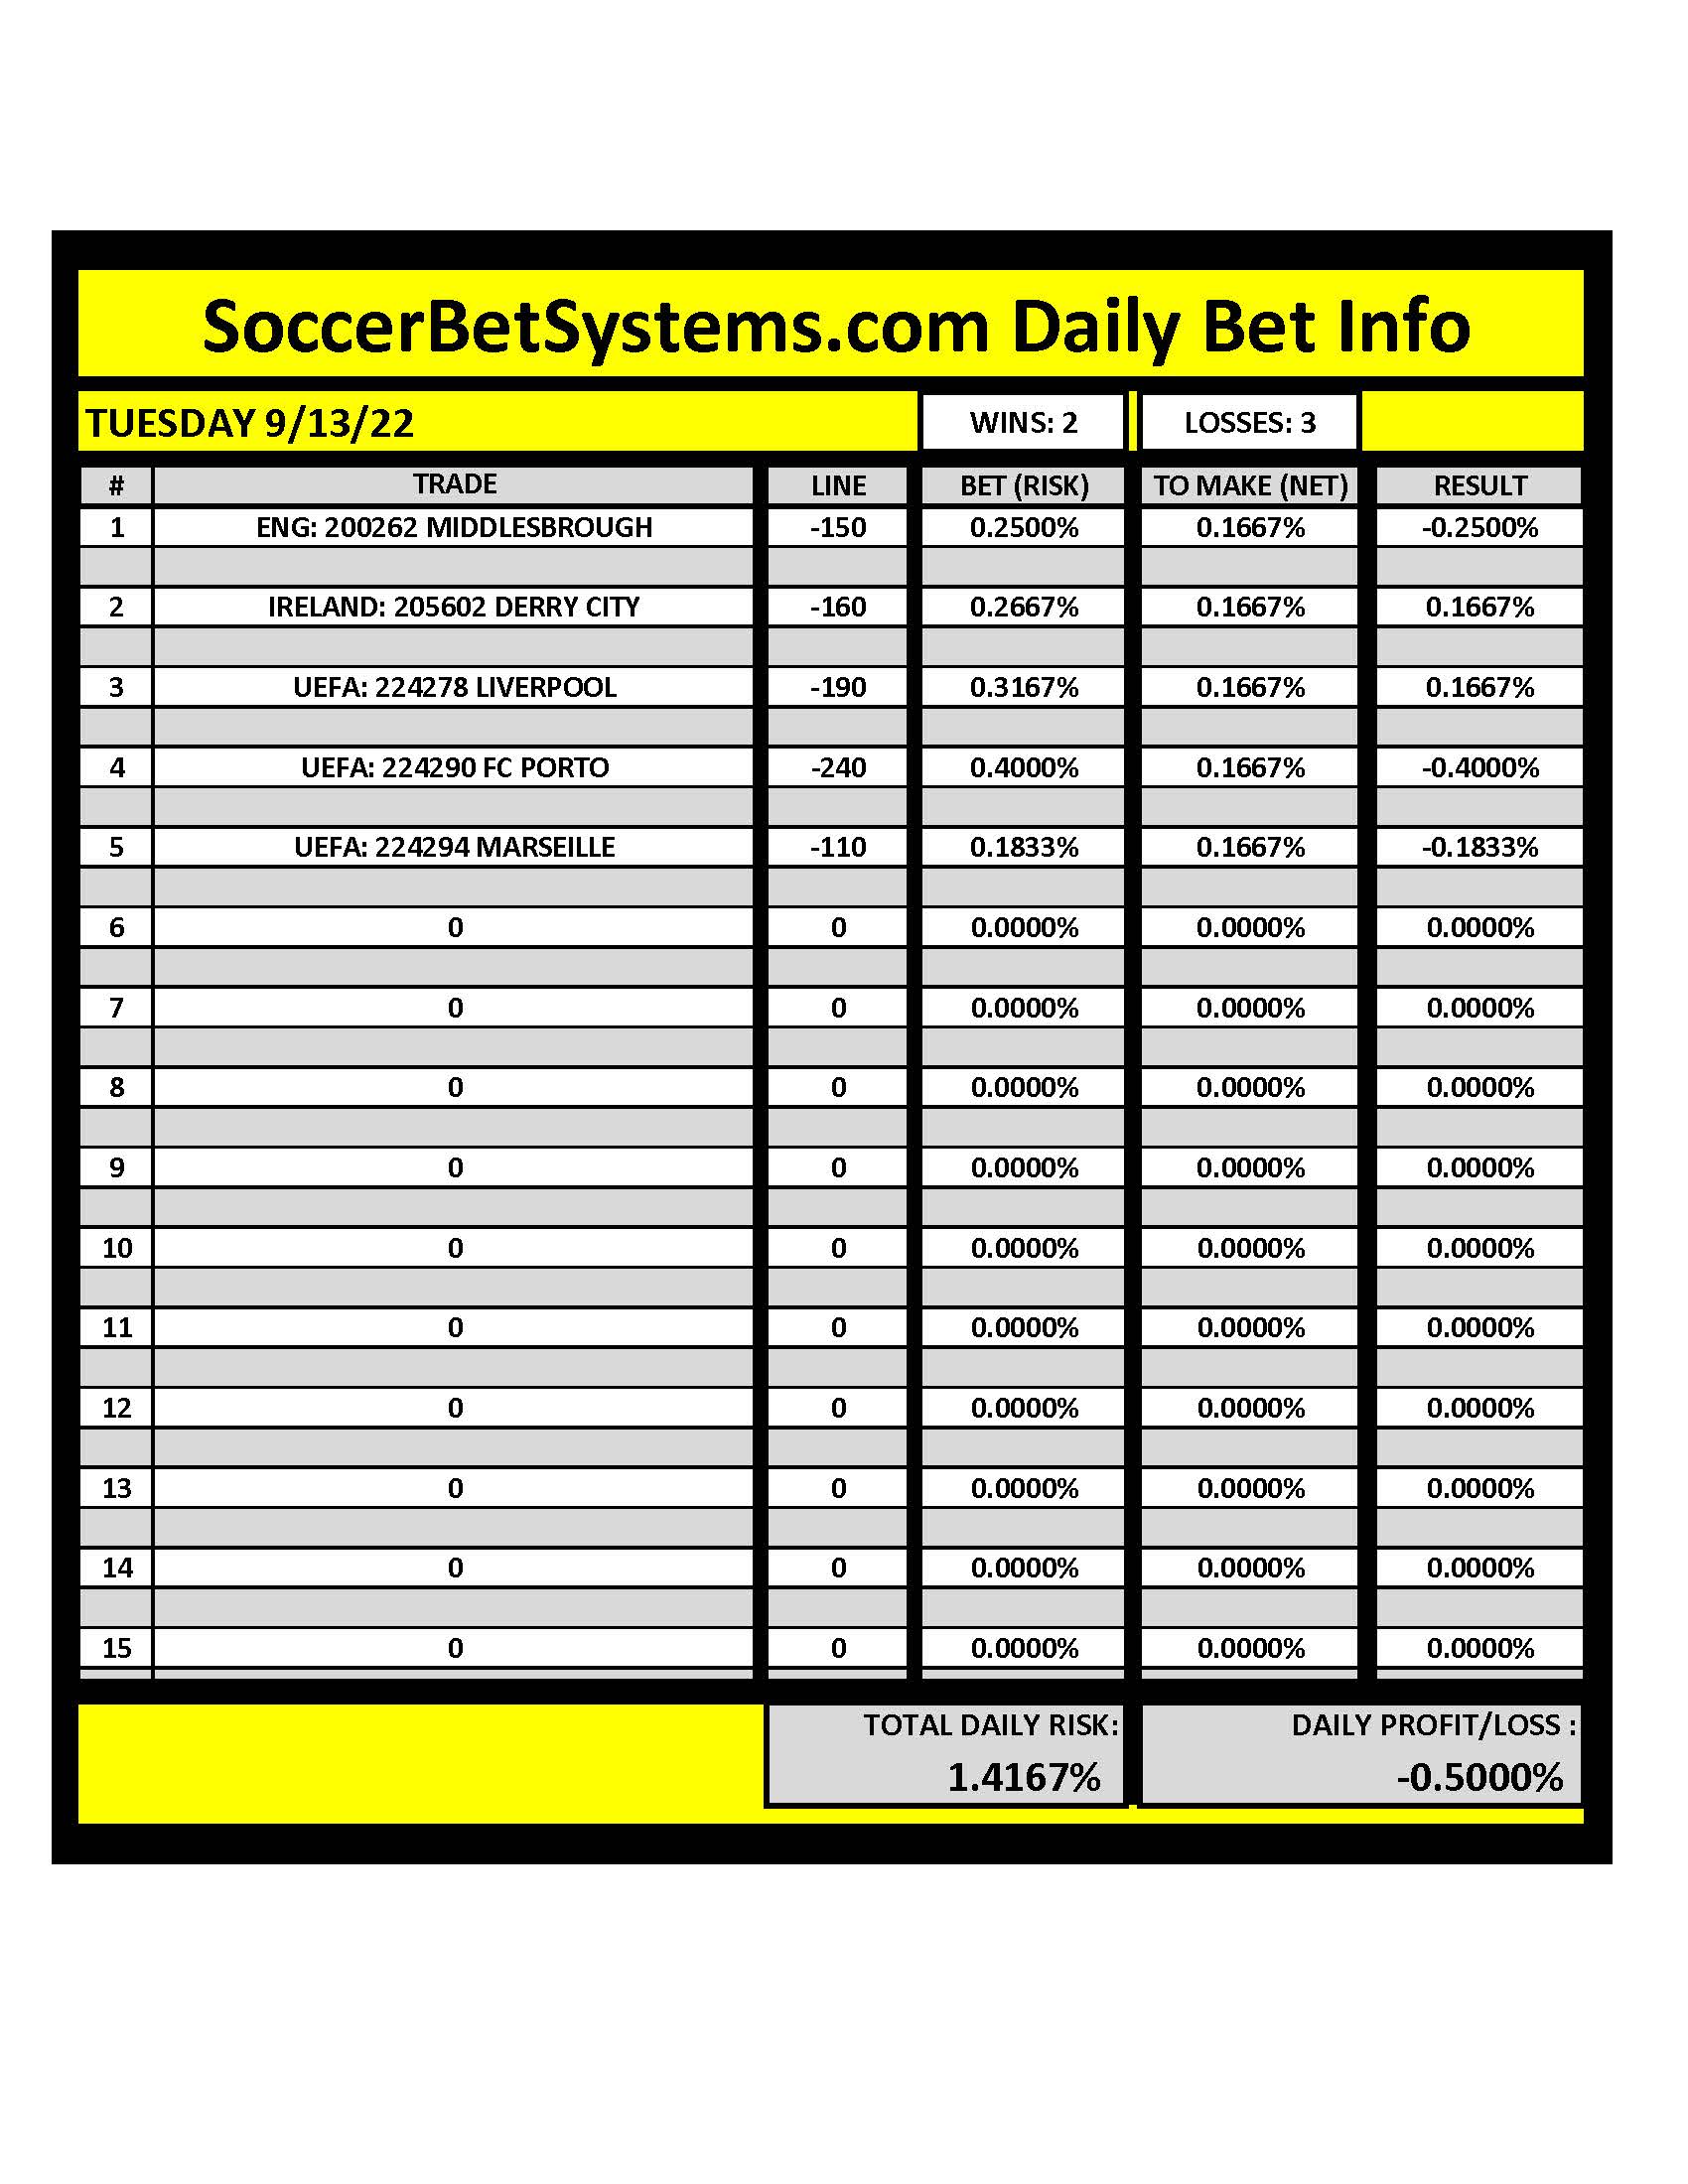 SoccerBetSystems.com 9/13/22 Daily Results